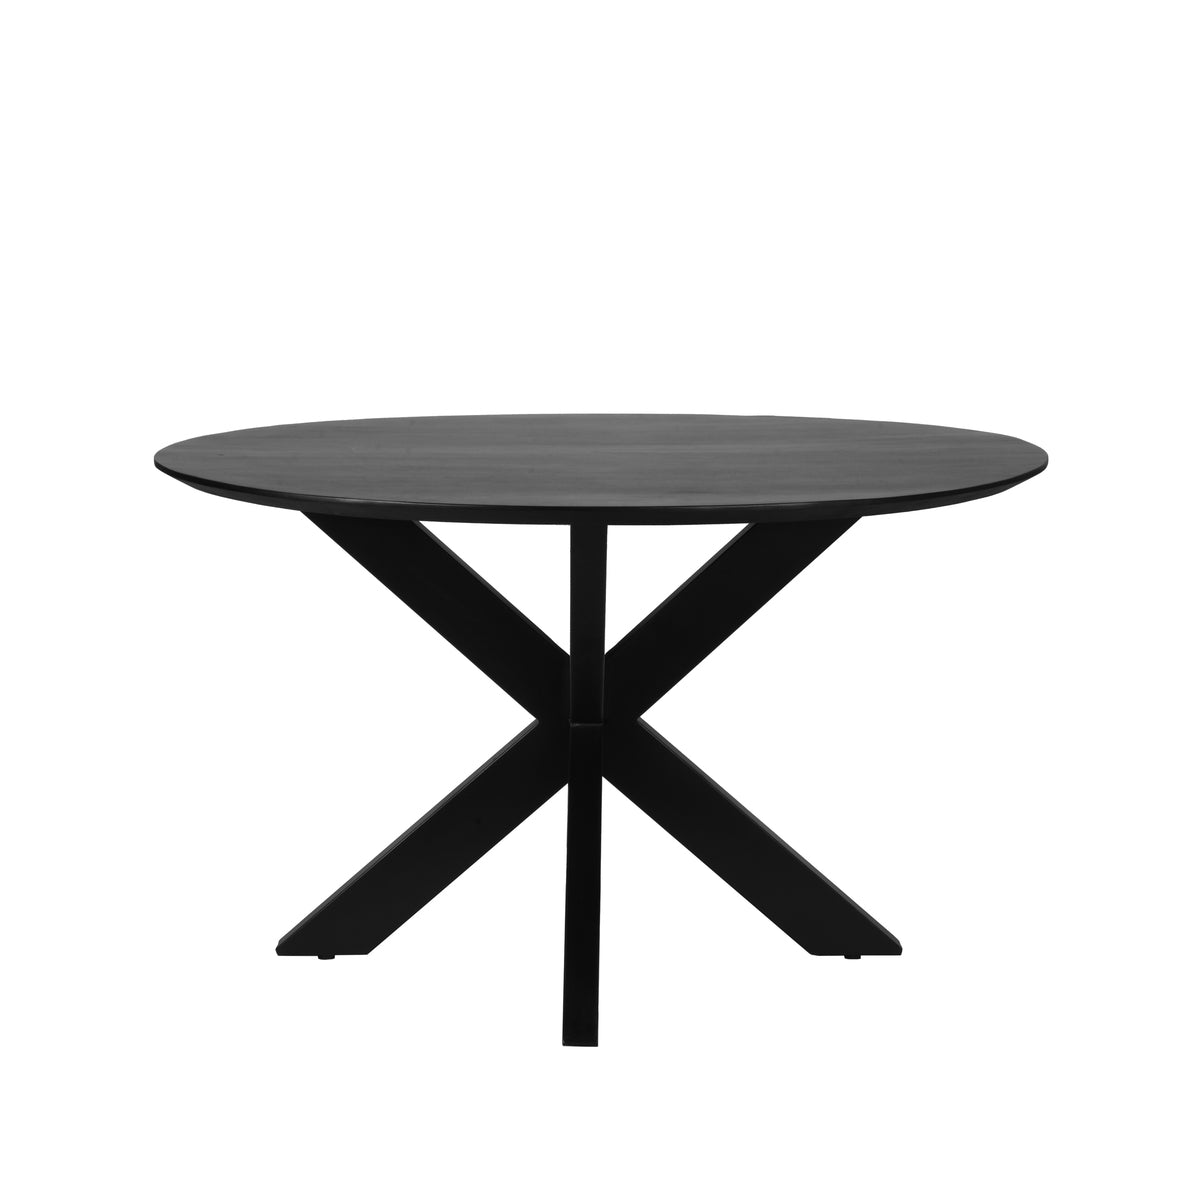 LABEL51 Zico dining room table - Black - Mango wood - Round - 130